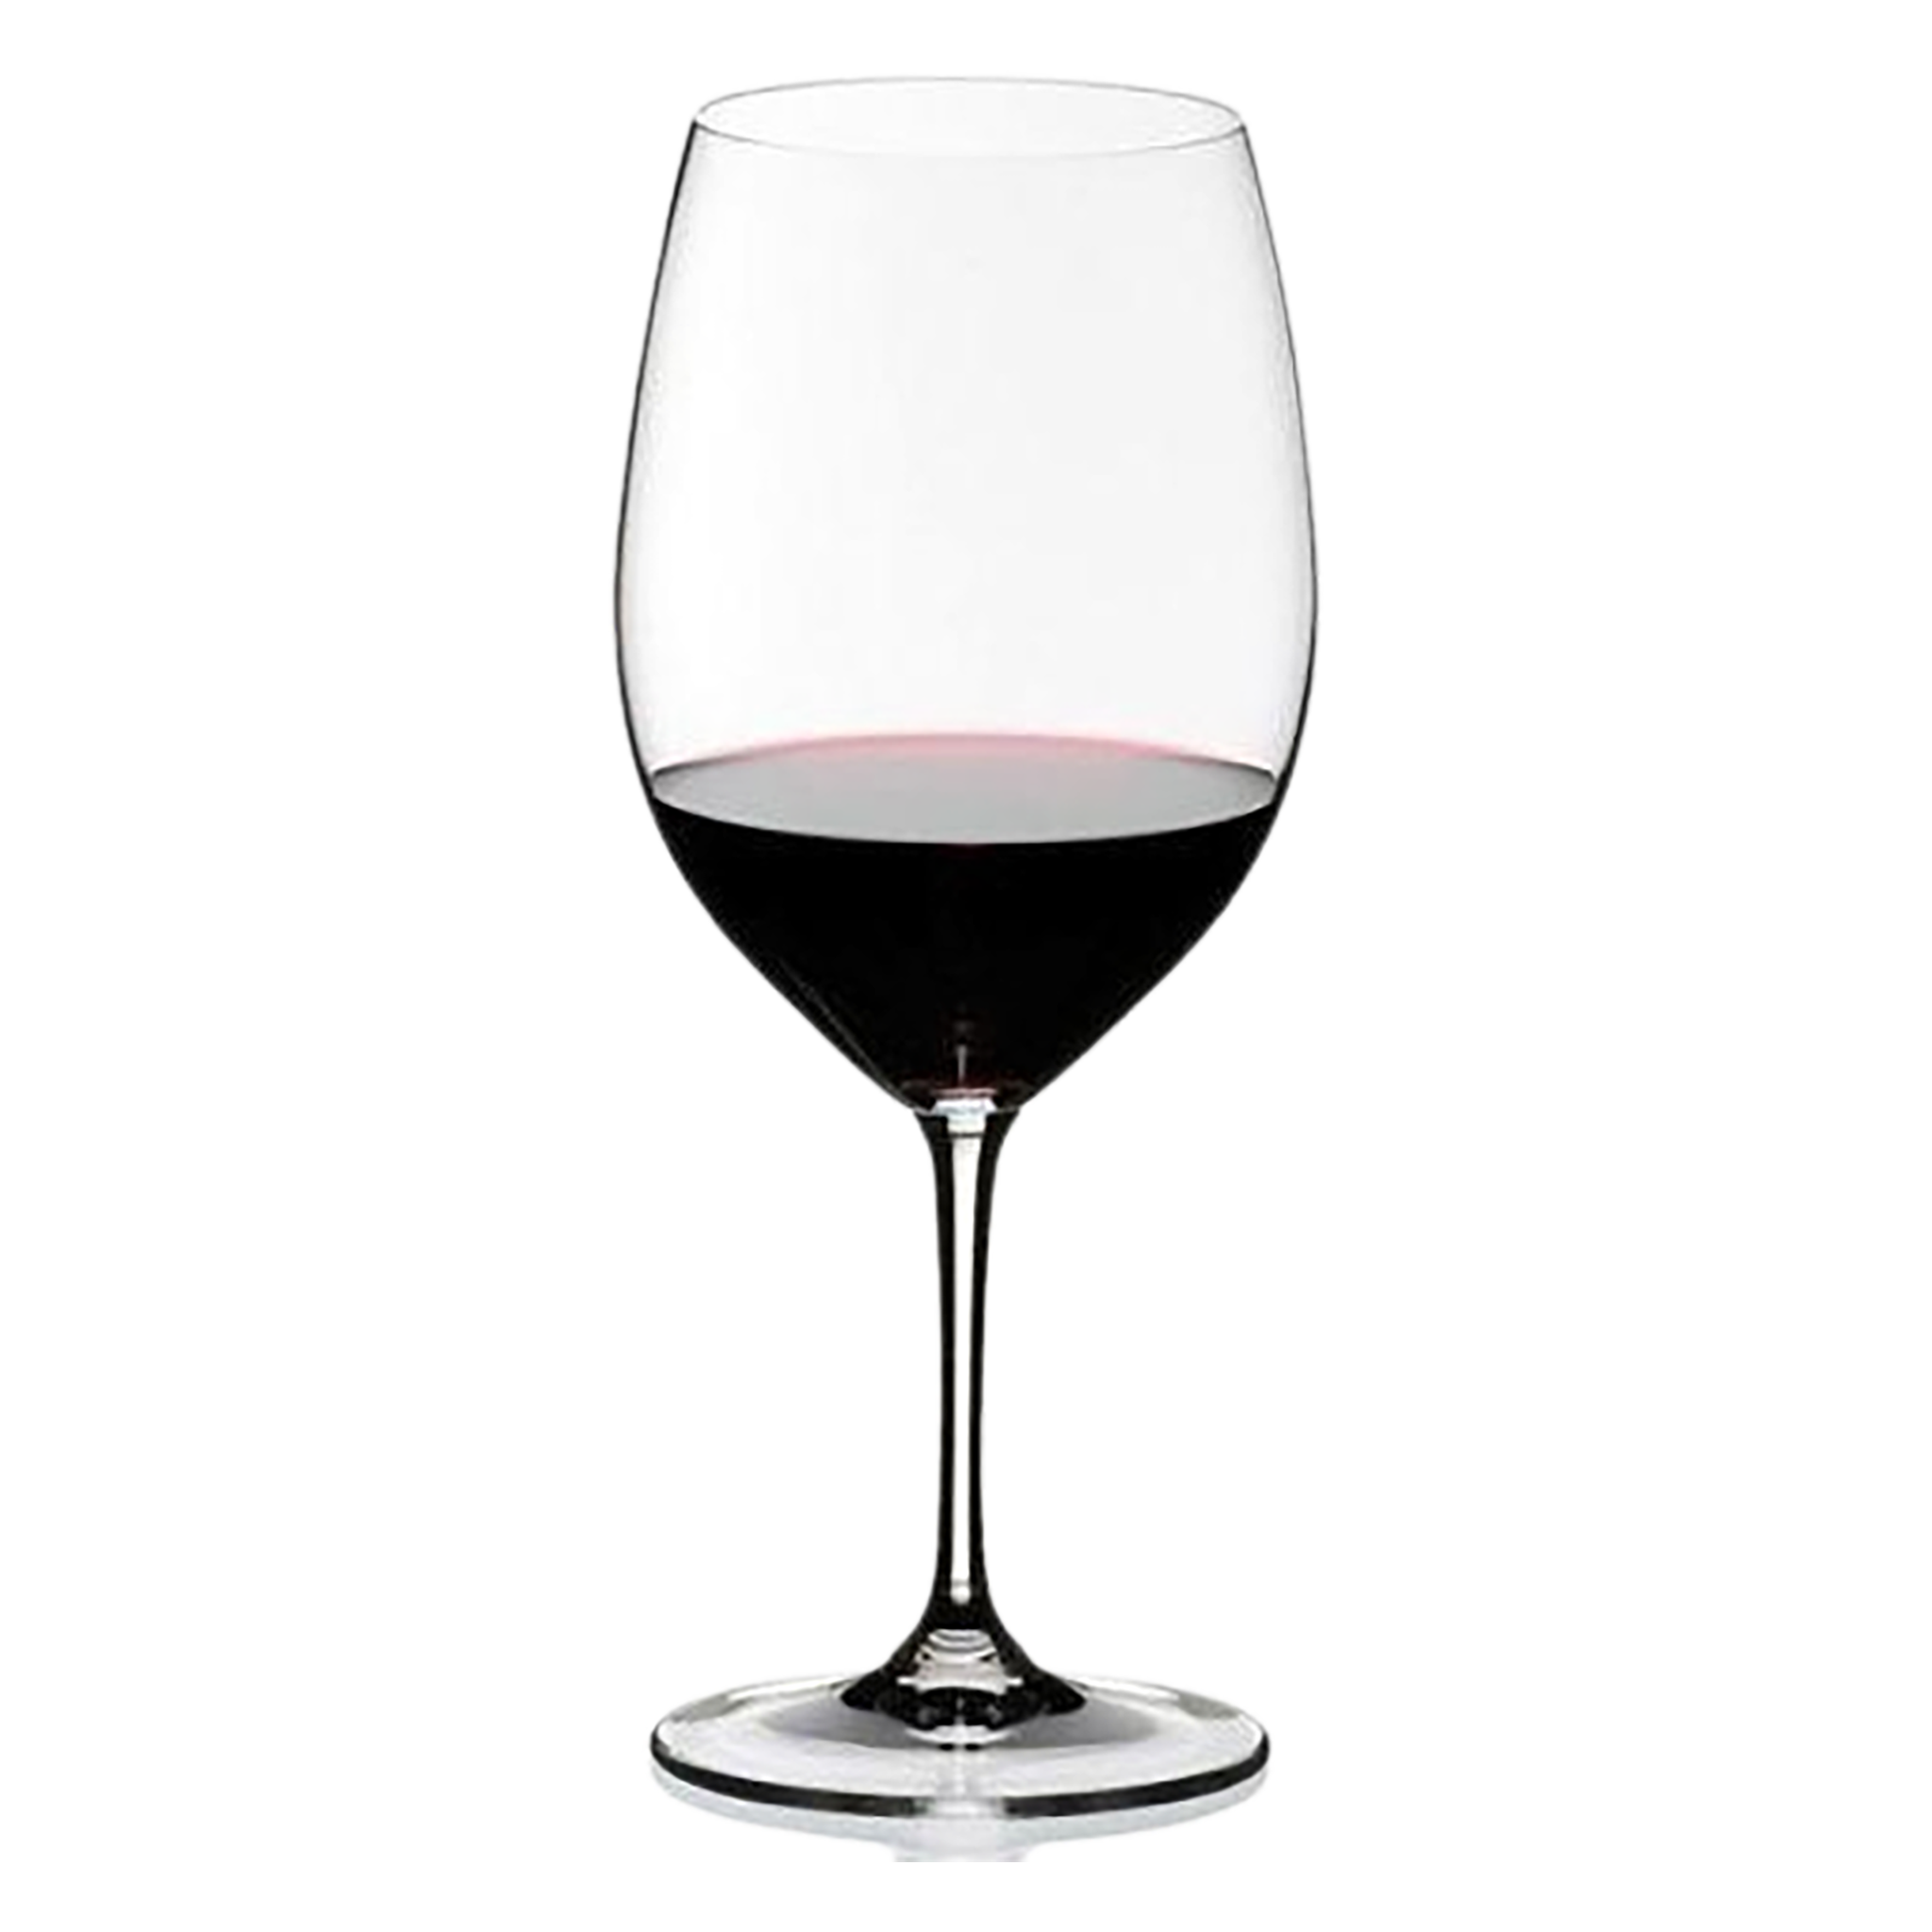 Riedel Wine Series 21.5 oz. Cabernet/Merlot Wine Glass (2-Pack